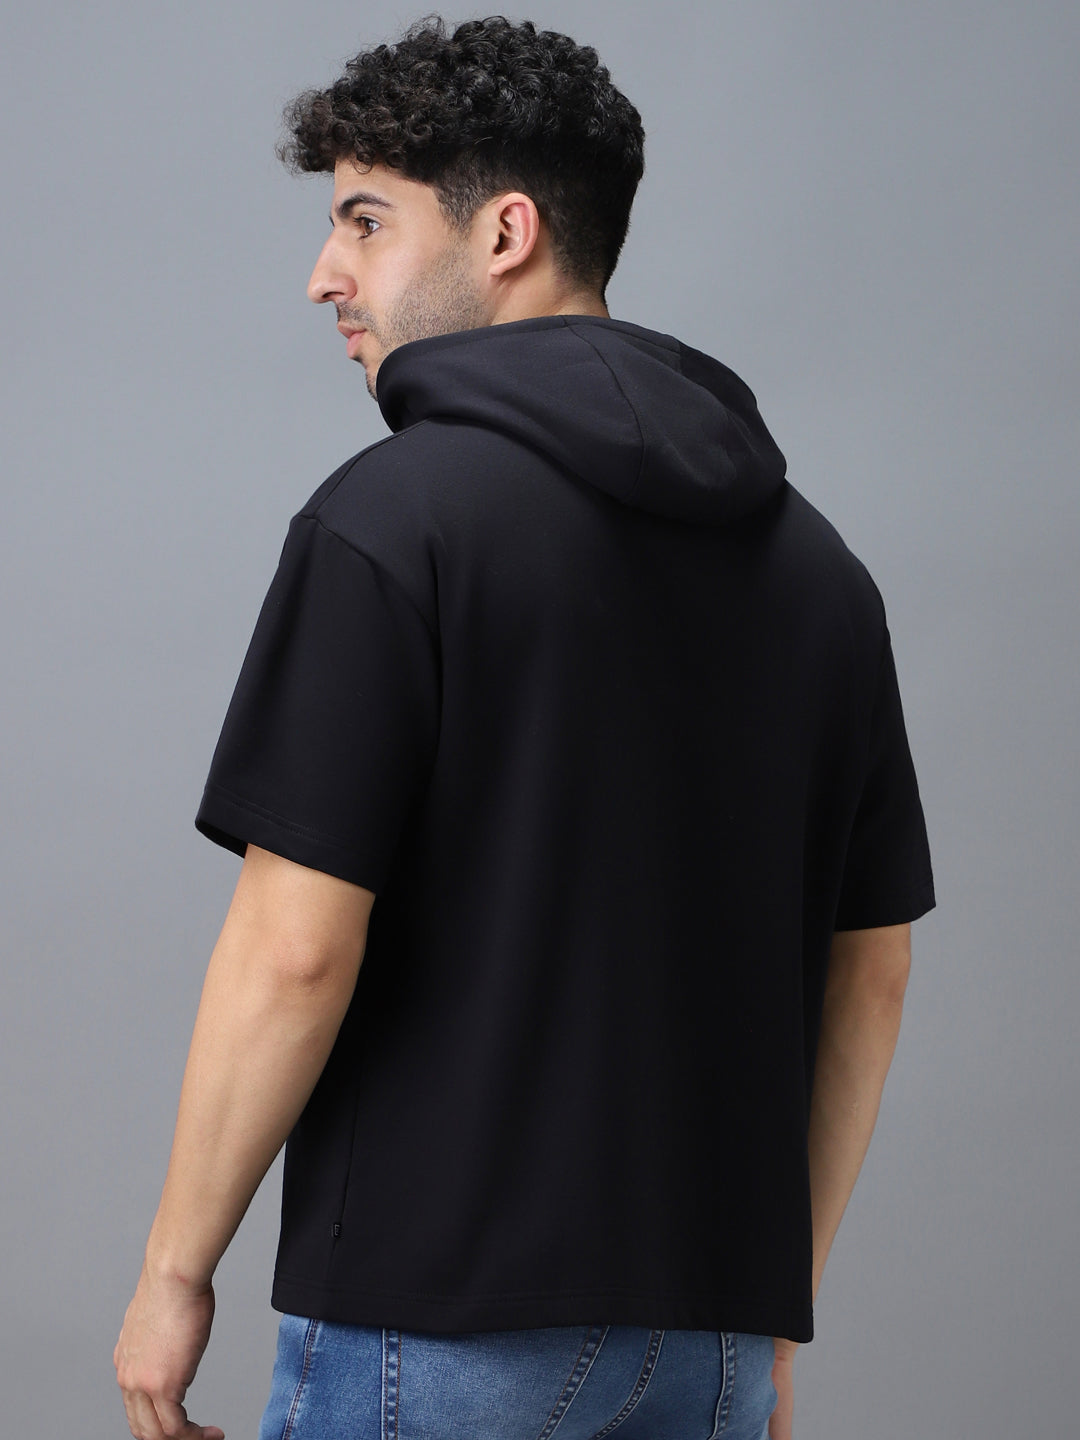 Urbano Fashion Men's Black Cotton Solid Oversized Hooded Neck Sweatshirt